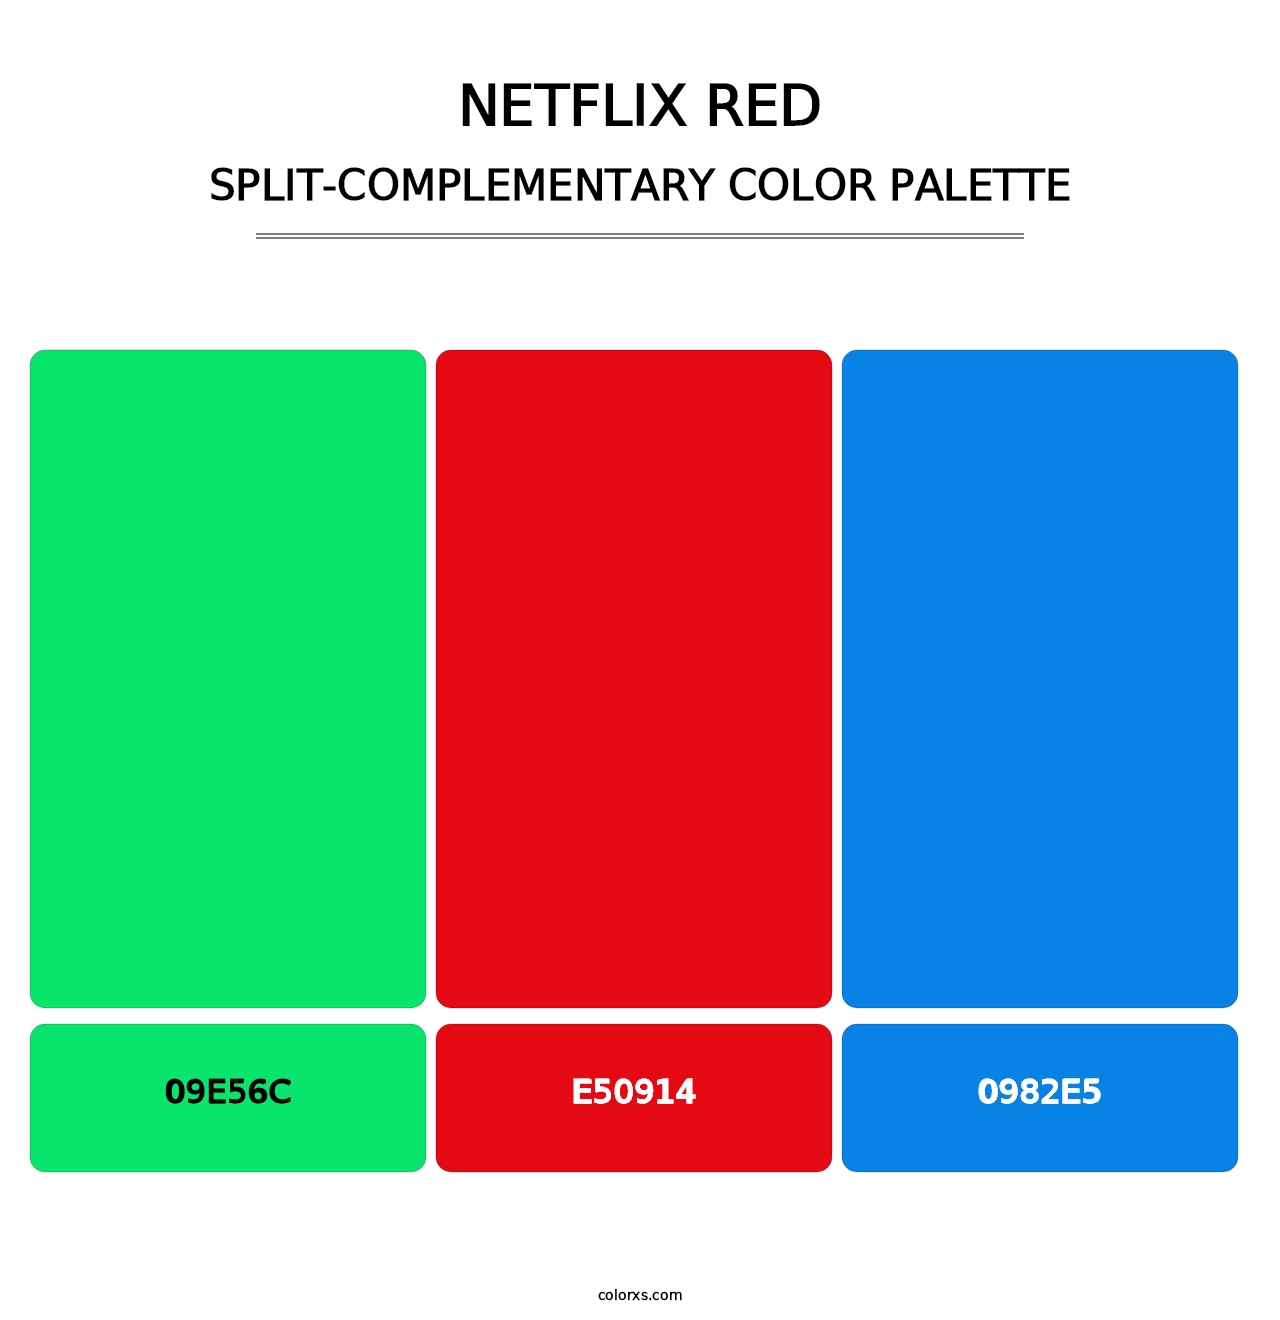 Netflix Red - Split-Complementary Color Palette